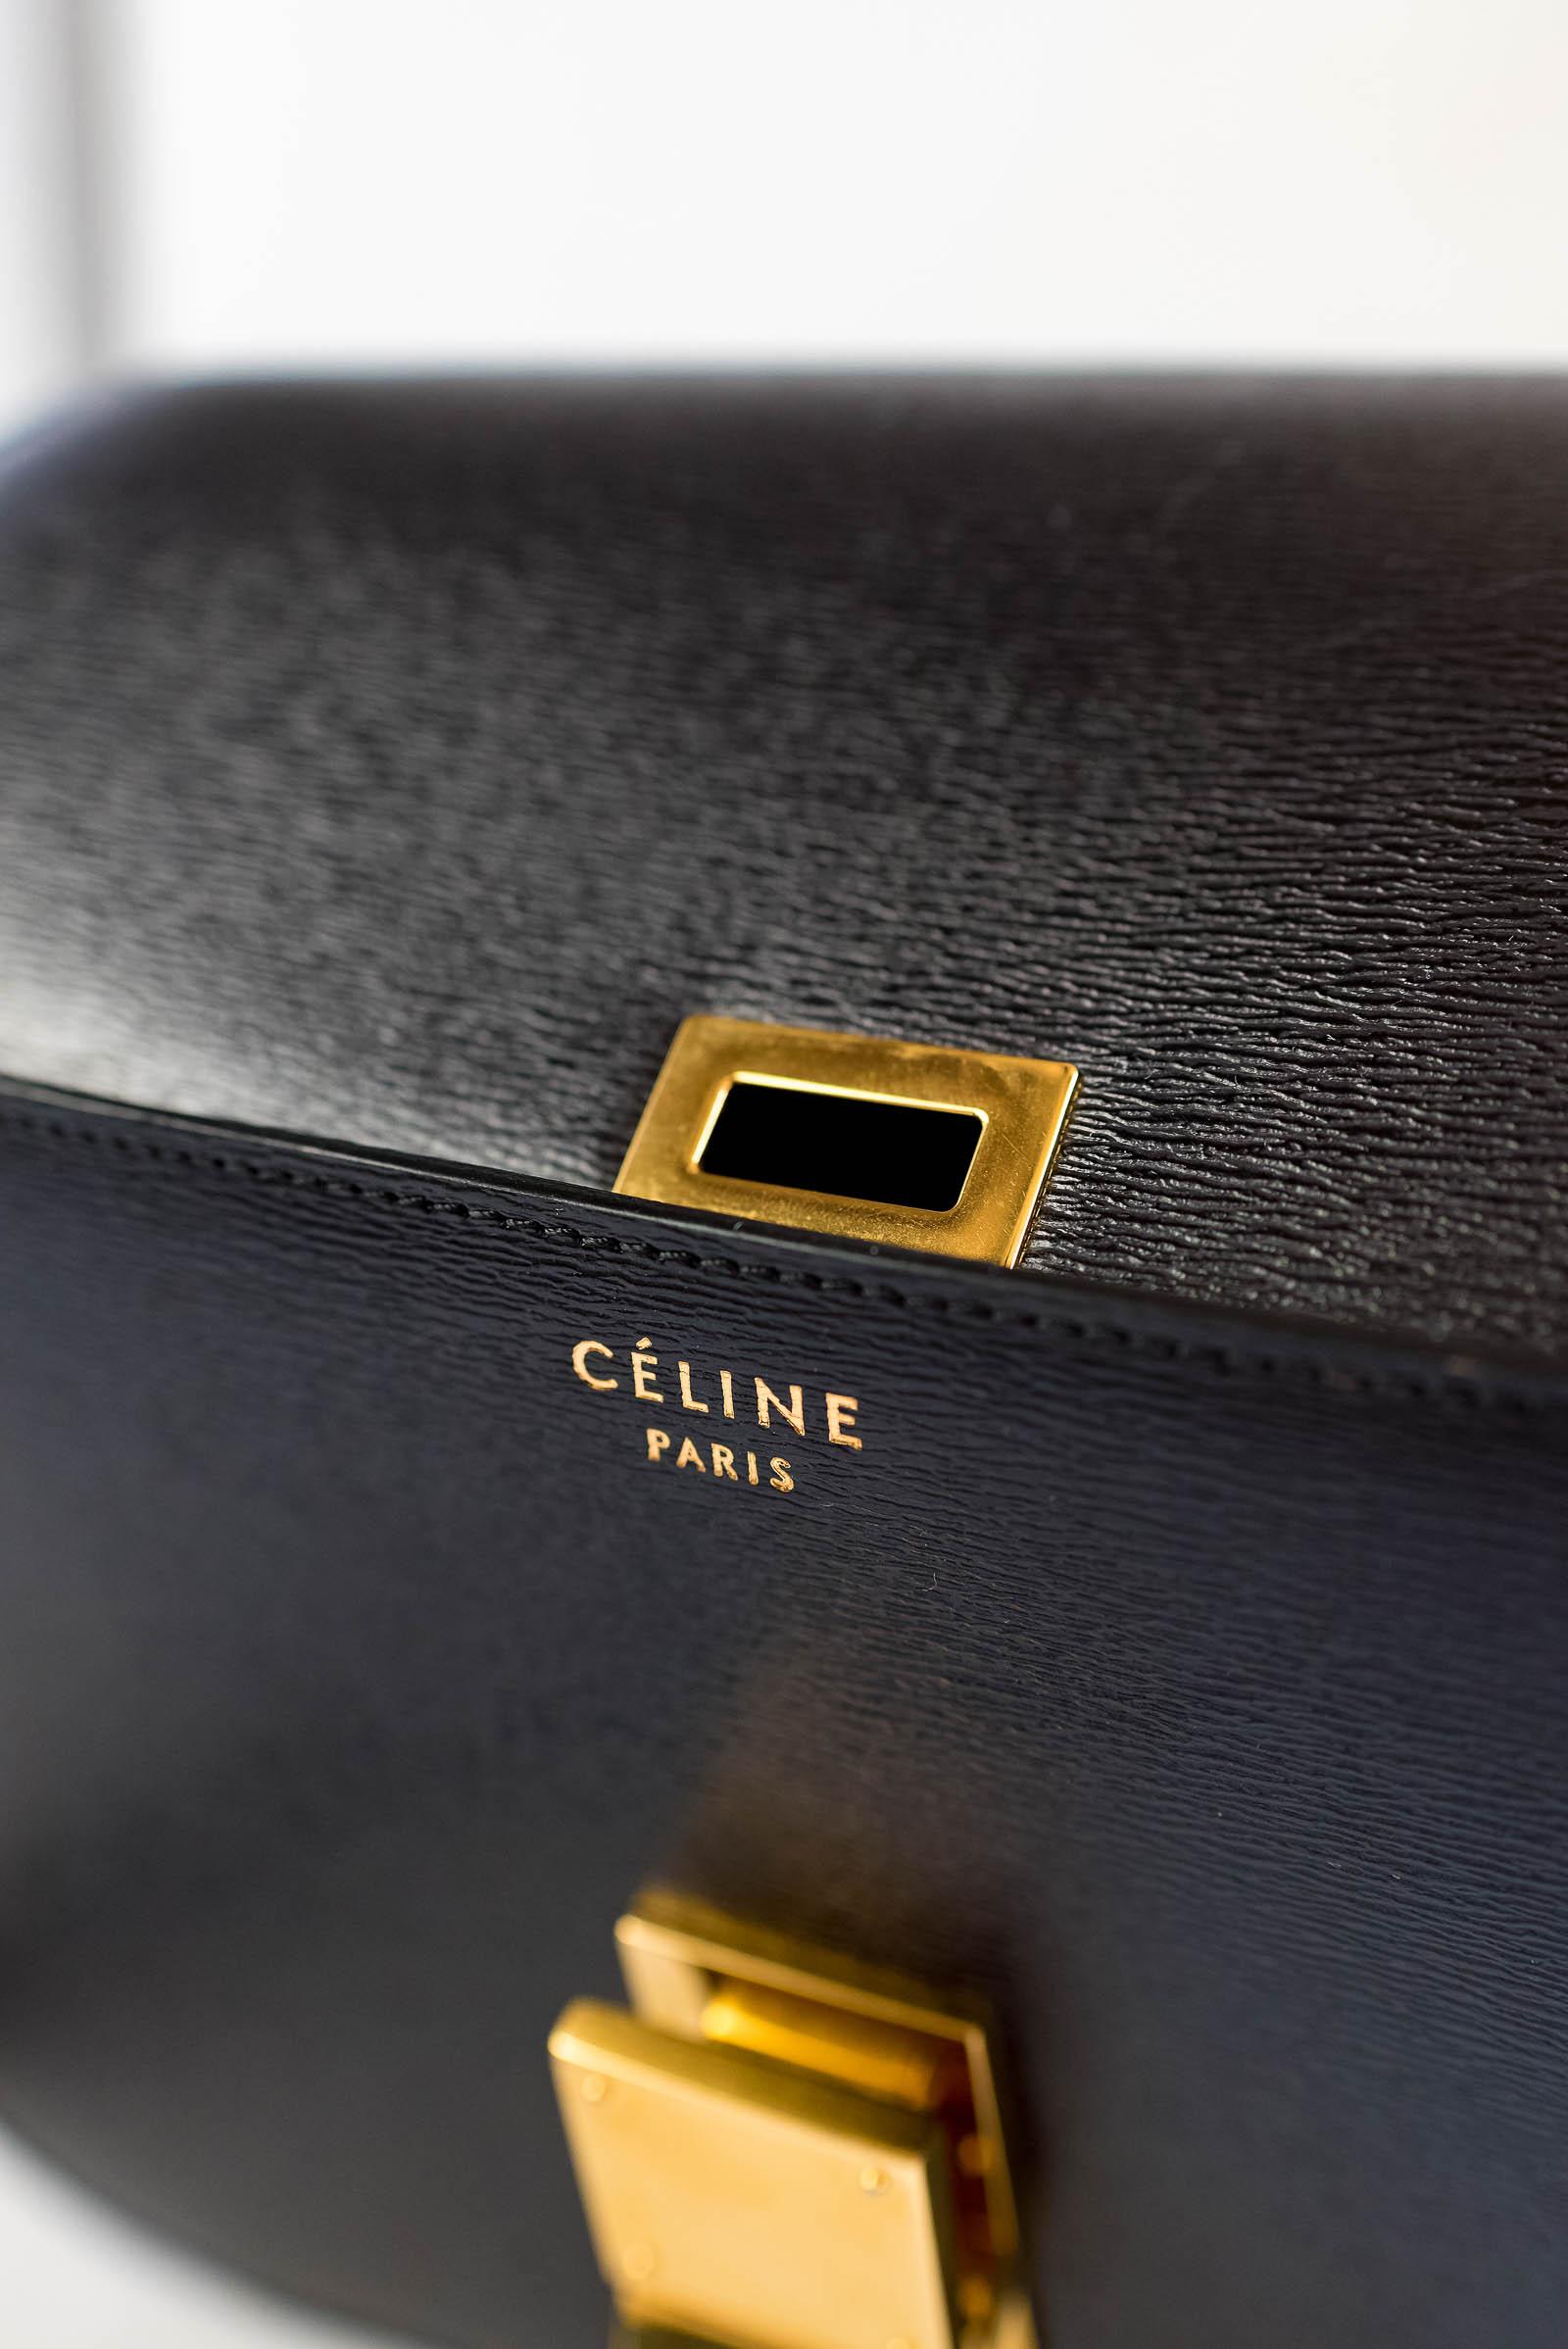 Celine Box Bag Reference Guide